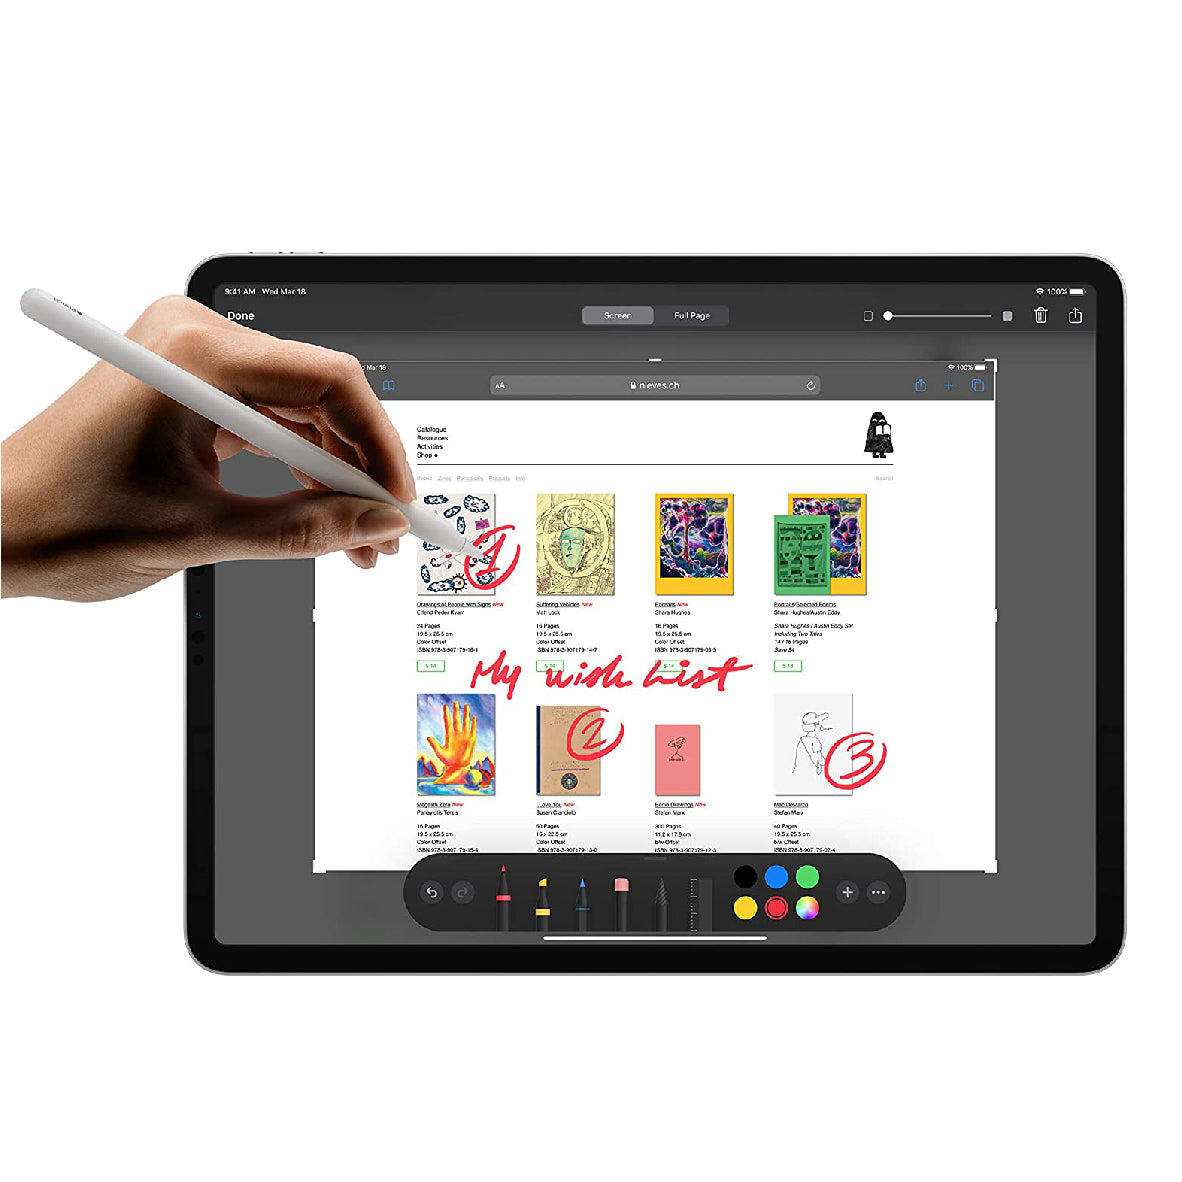 Apple iPad Pro (11-inch, Wi-Fi + Cellular, 1TB) - 2nd Generation 2020 Model